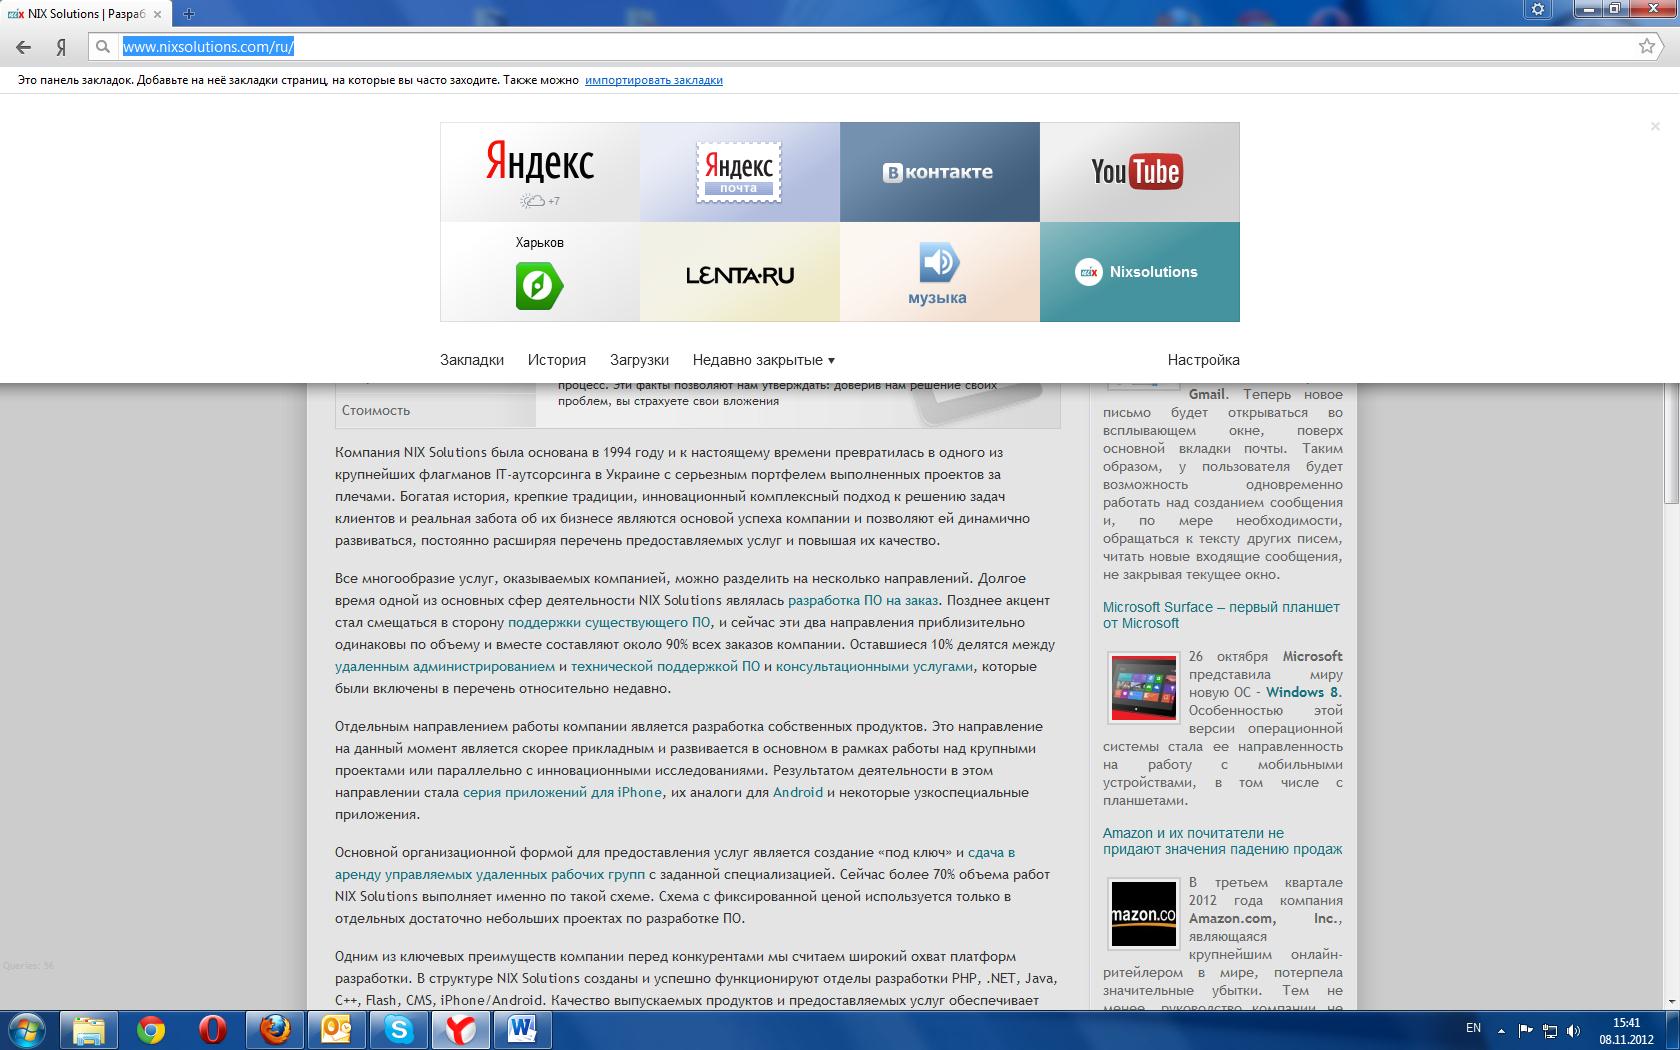 Технология Opera Turbo в Яндекс.Браузер 1.1